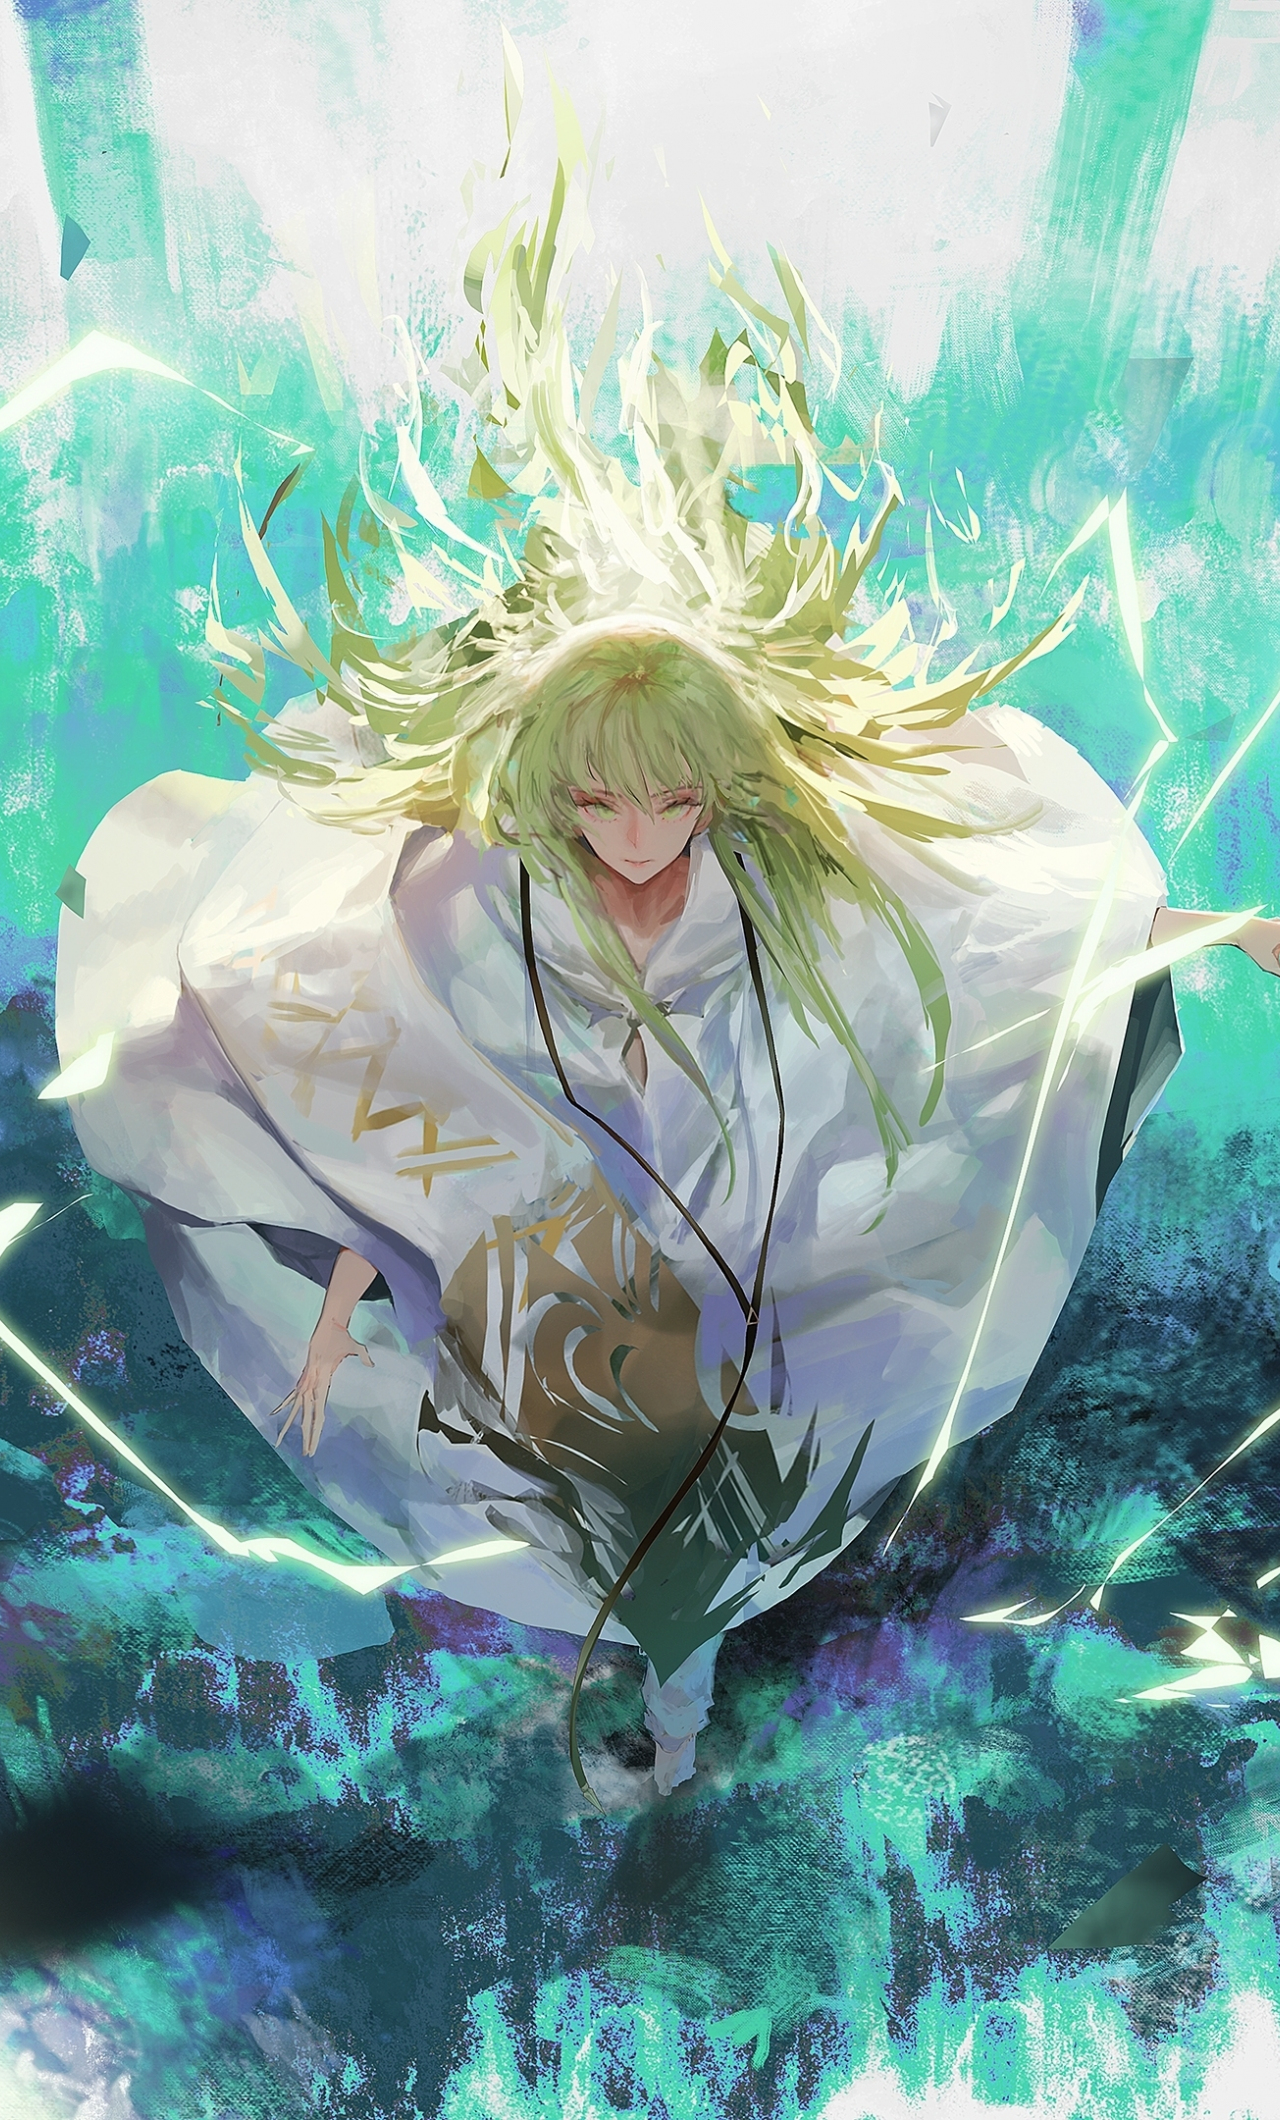 Download Art Enkidu Fate Grand Order Anime 1280x21 Wallpaper Iphone 6 Plus 1280x21 Hd Image Background